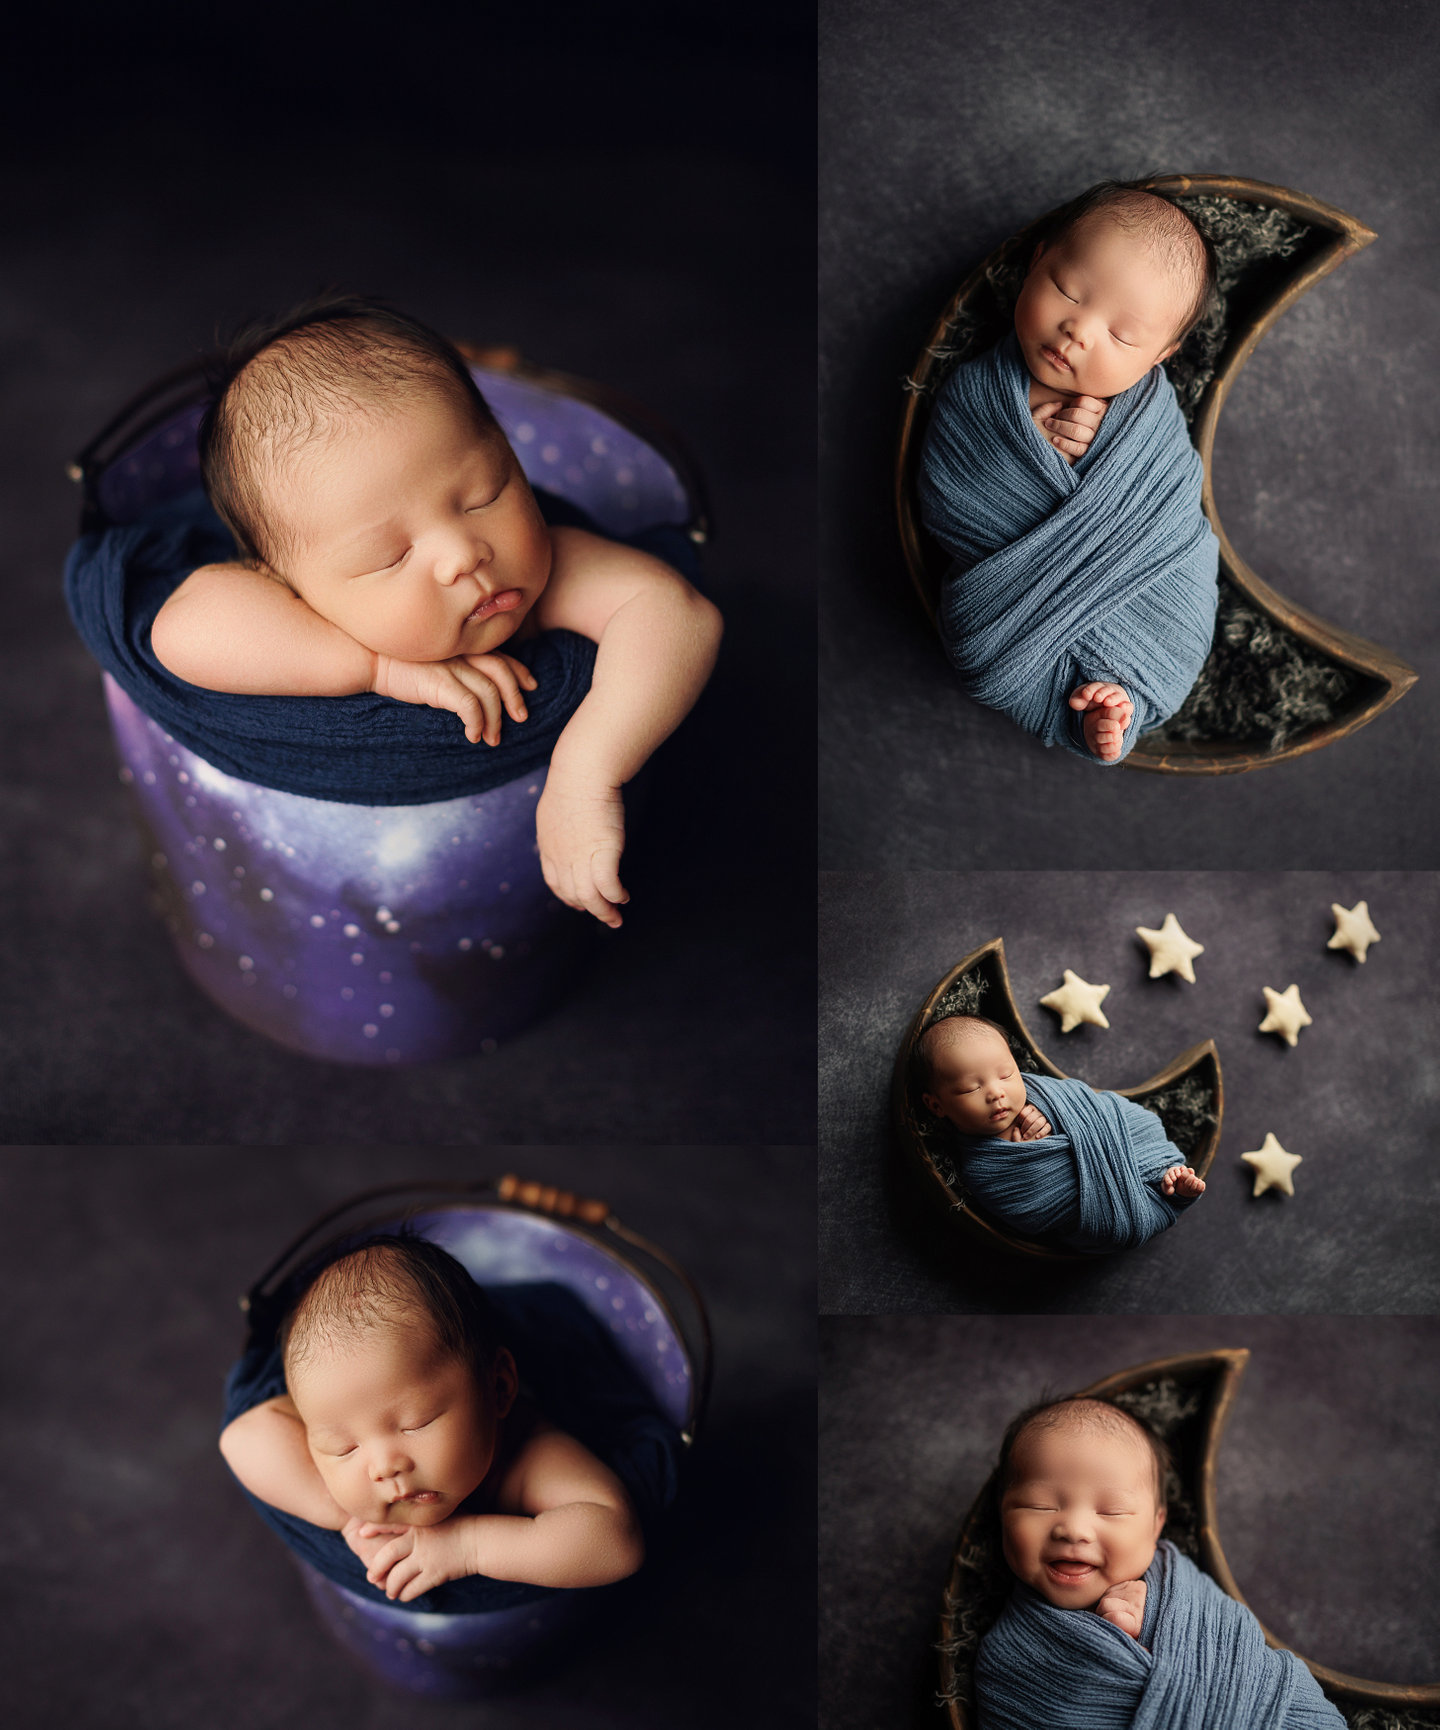 Airdrie & Calgary Newborn Photography • Baby Boy 'O' Studio Newborn Session  - Hocus Focus Photography